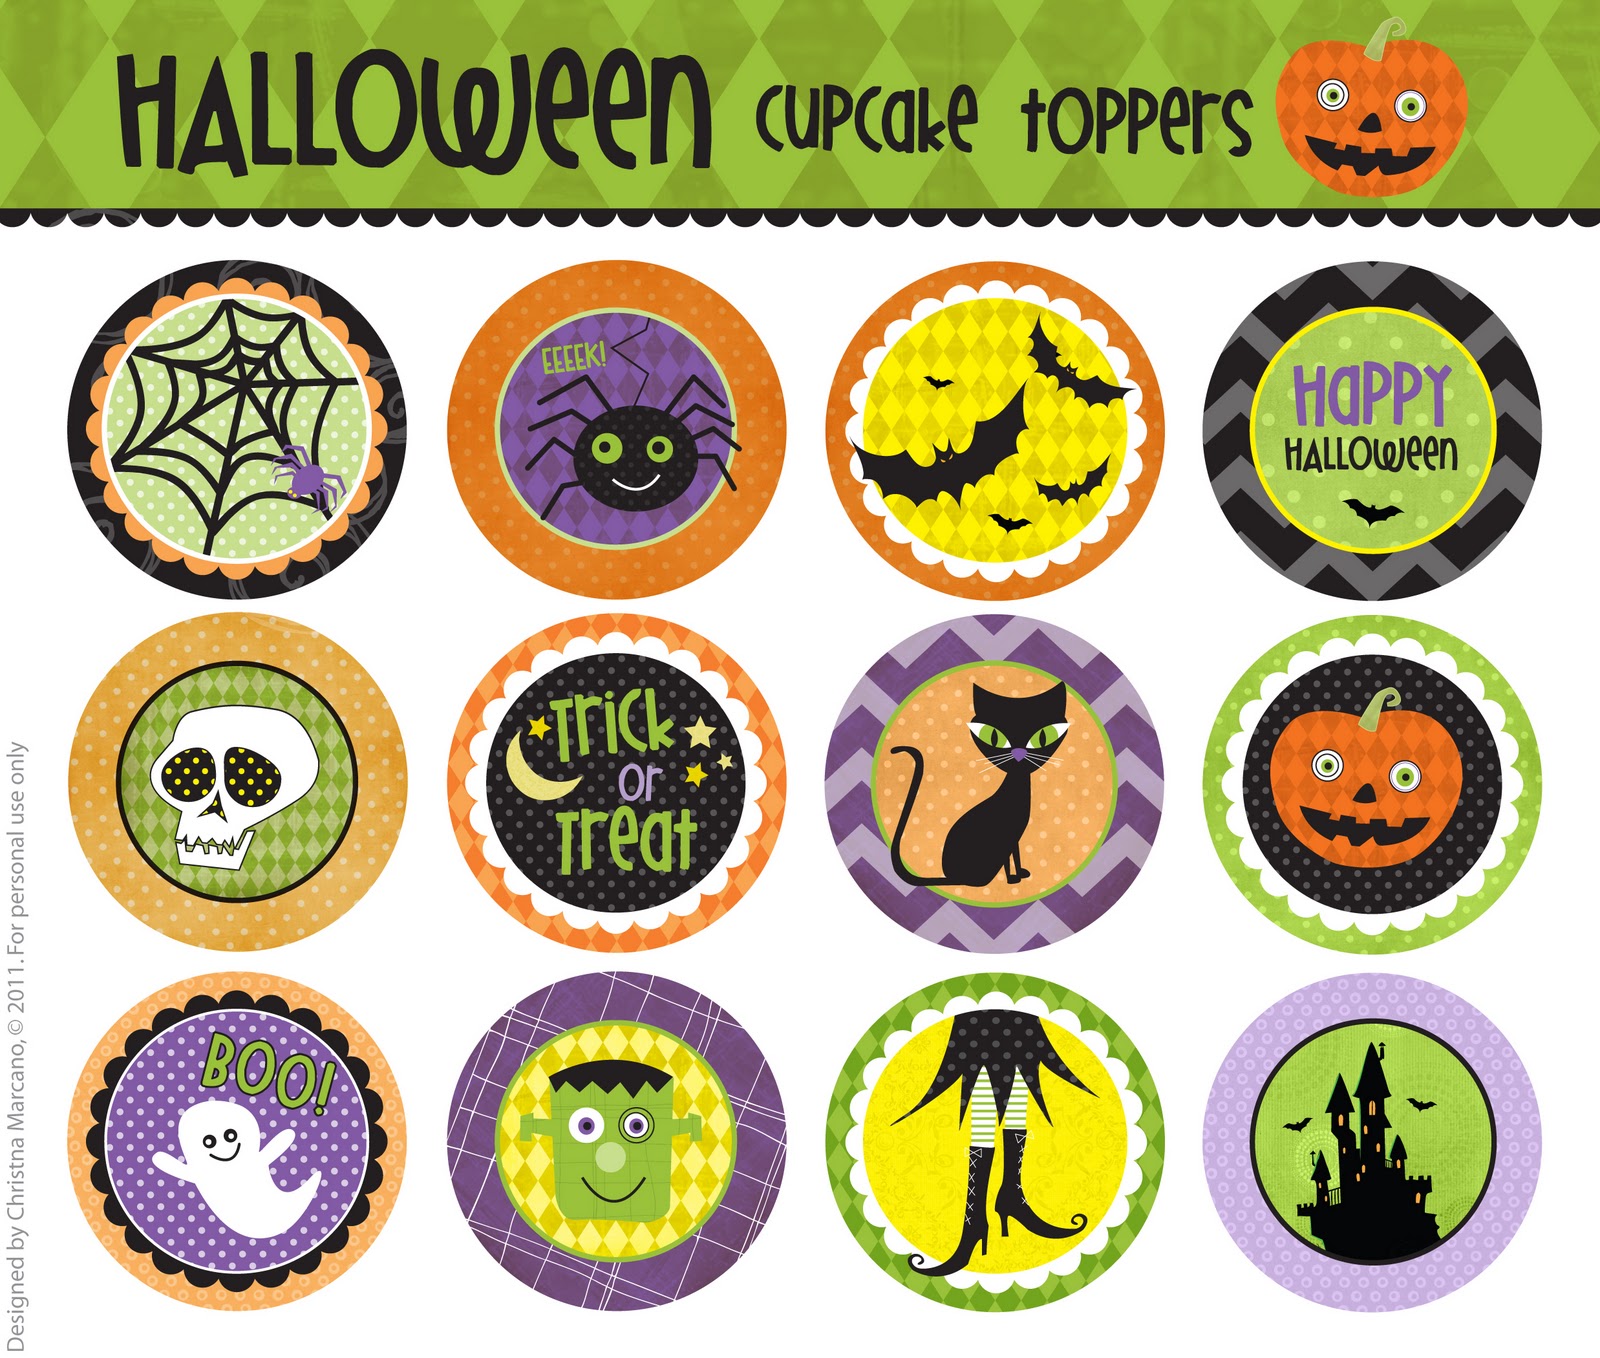 cm2-halloween-cupcake-toppers-f-r-e-e-printable